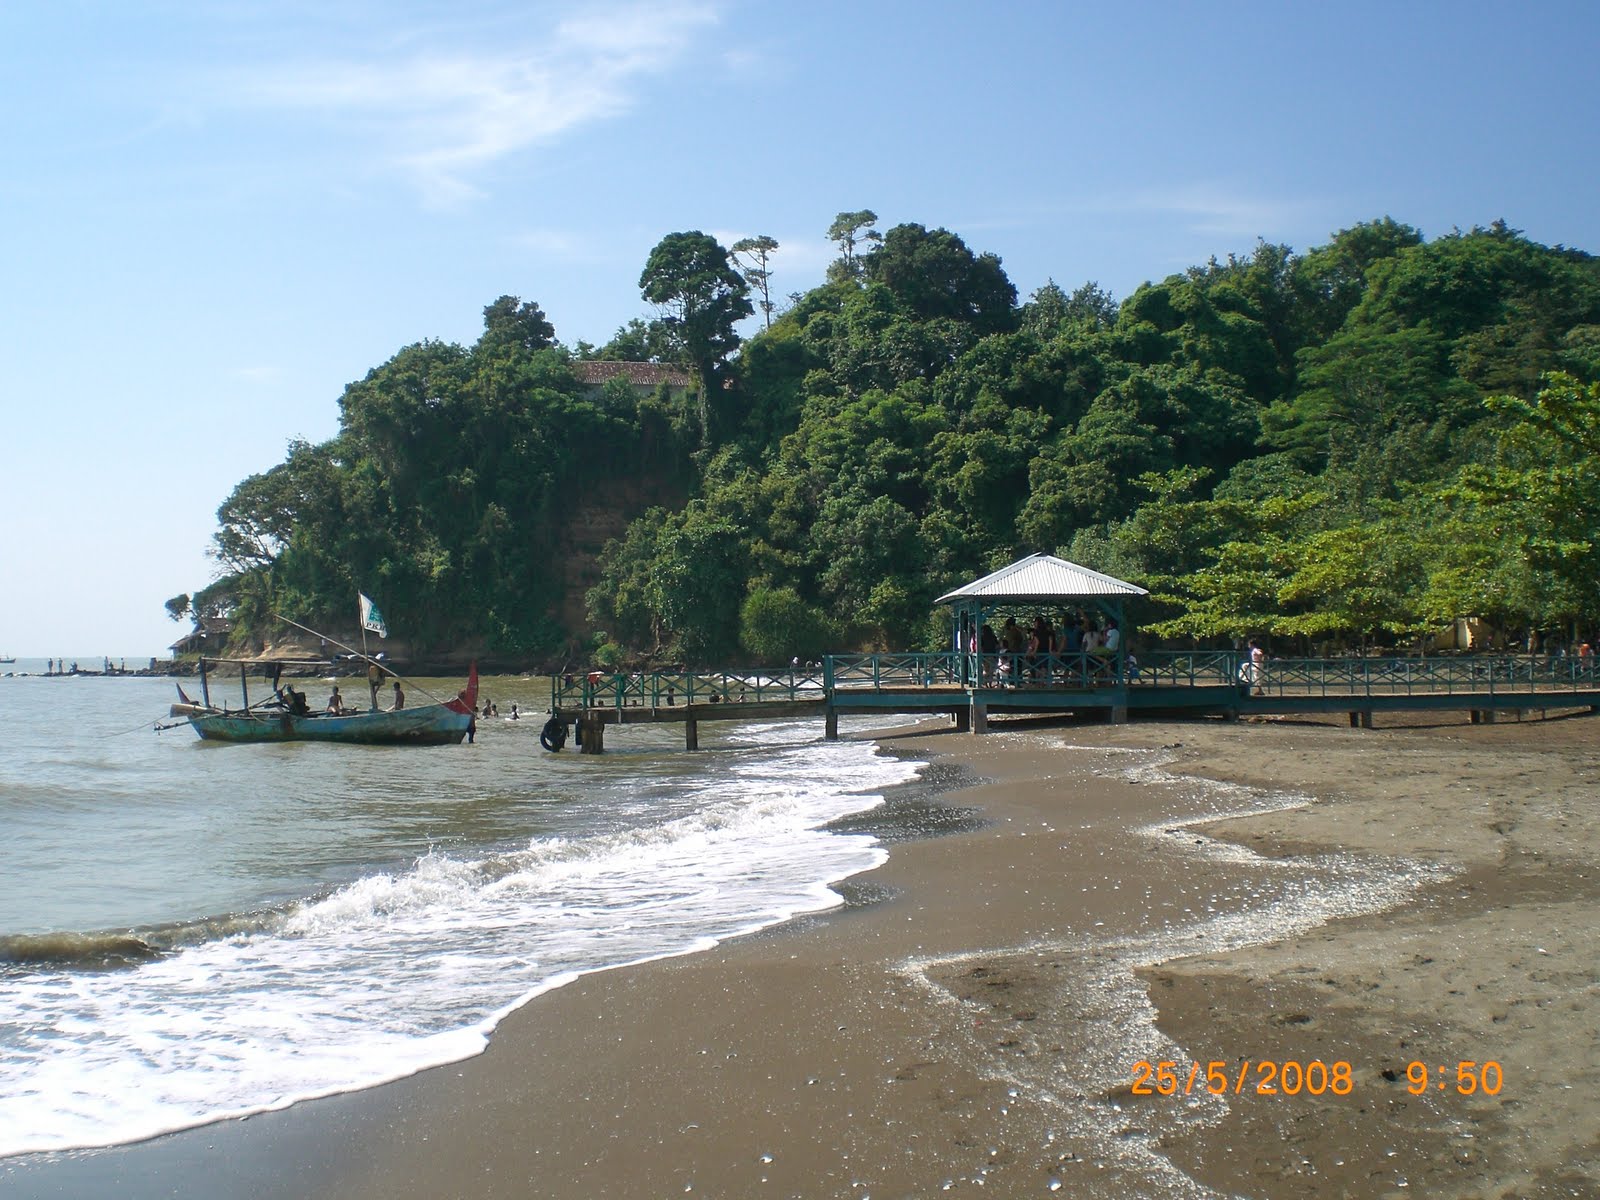 Pantai Ujung Negoro, Batang Central Java Indonesia